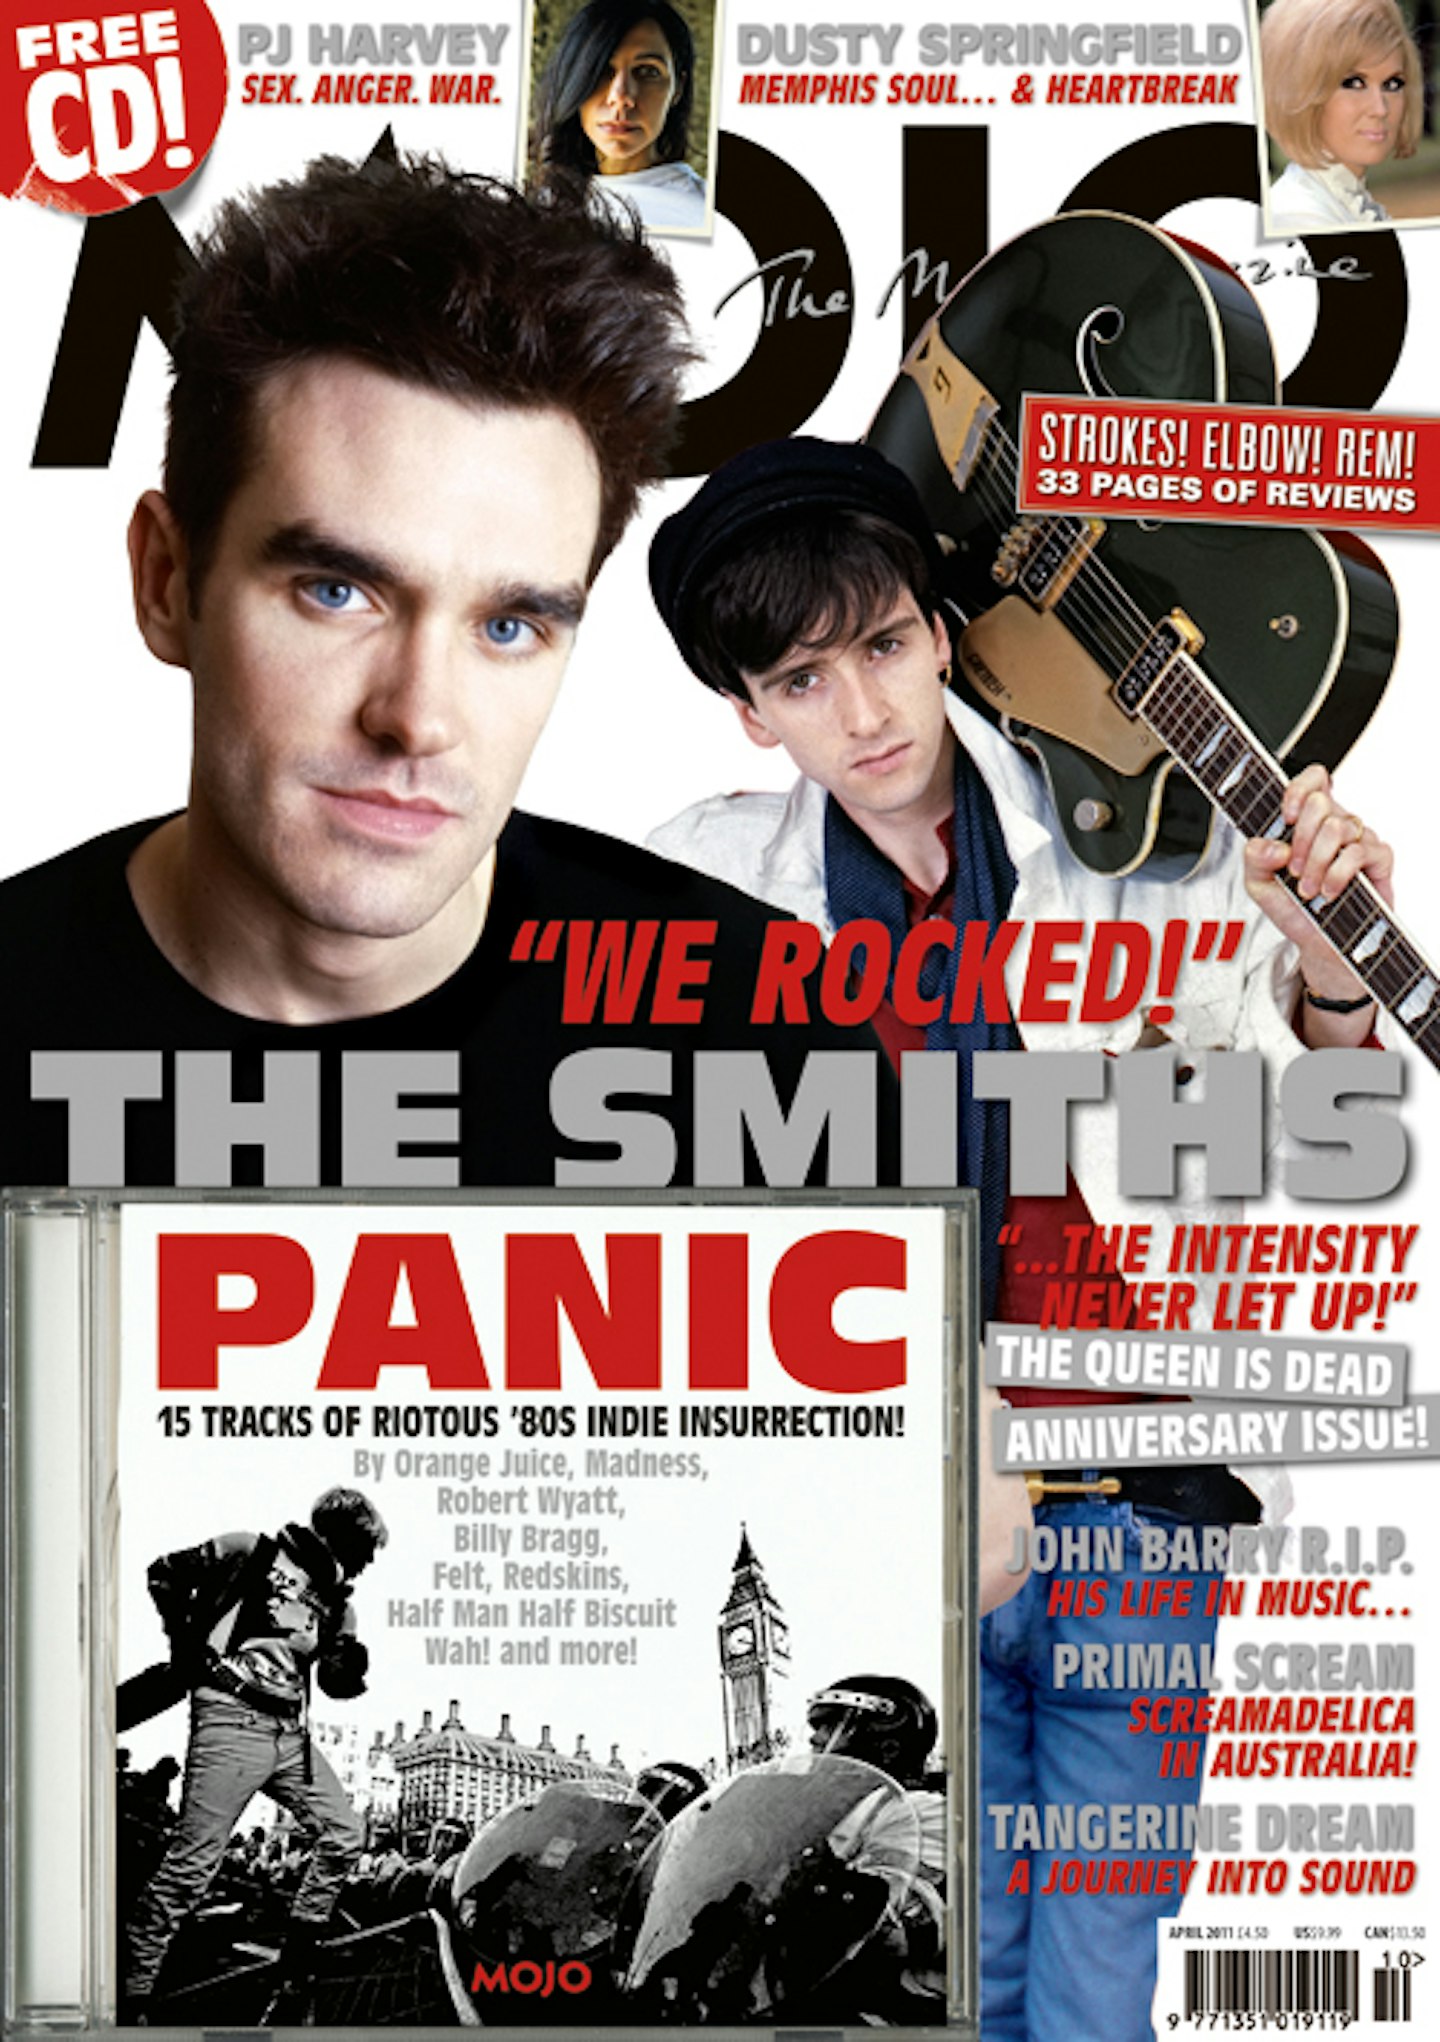 MOJO Issue 209 / April 2011